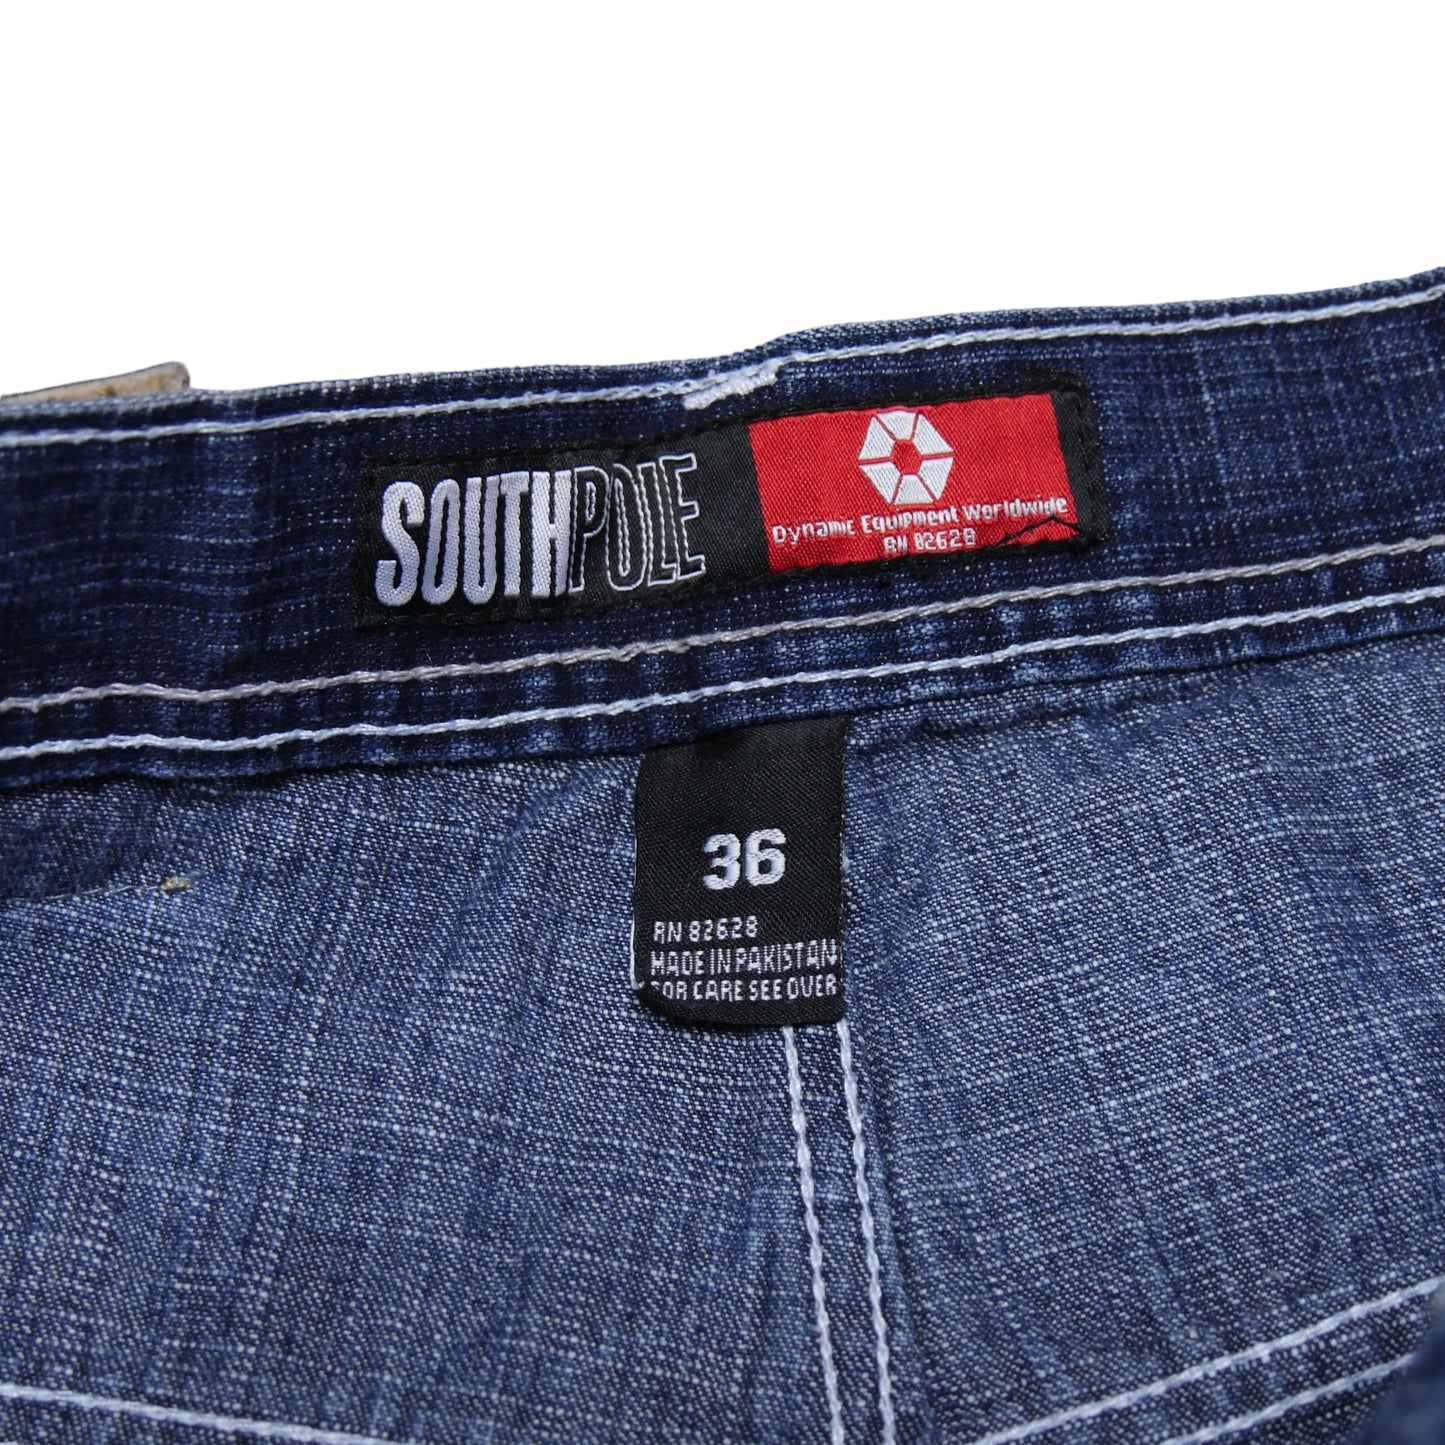 South Pole Shorts - 36